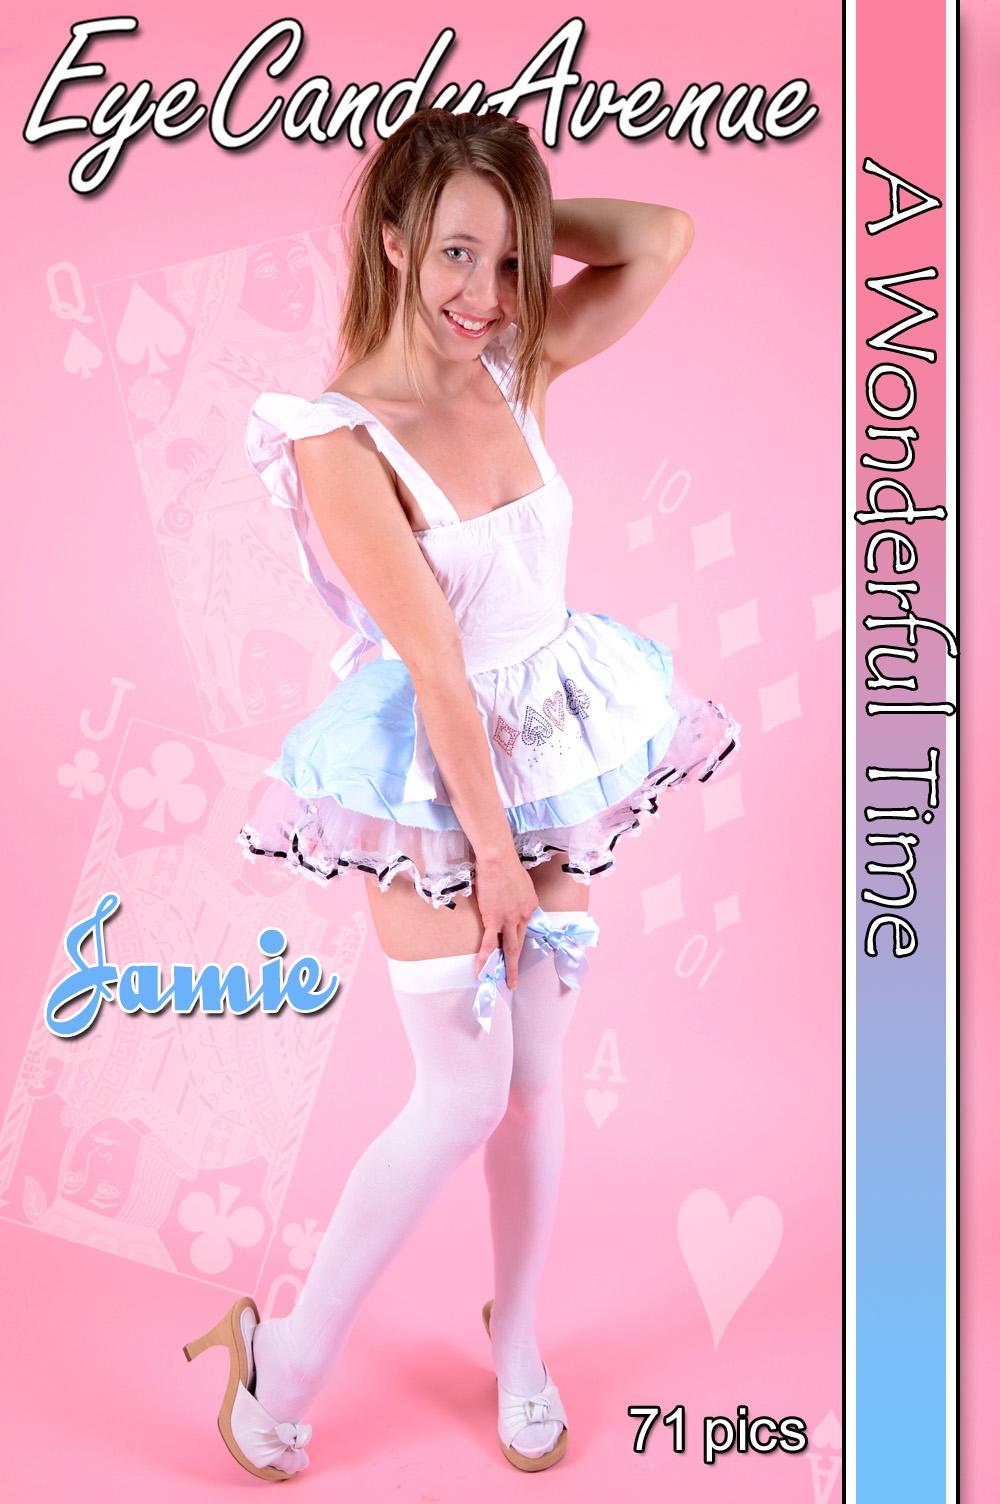 La jeune jamie joue à s'habiller comme une Alice sexy.
 #55061094